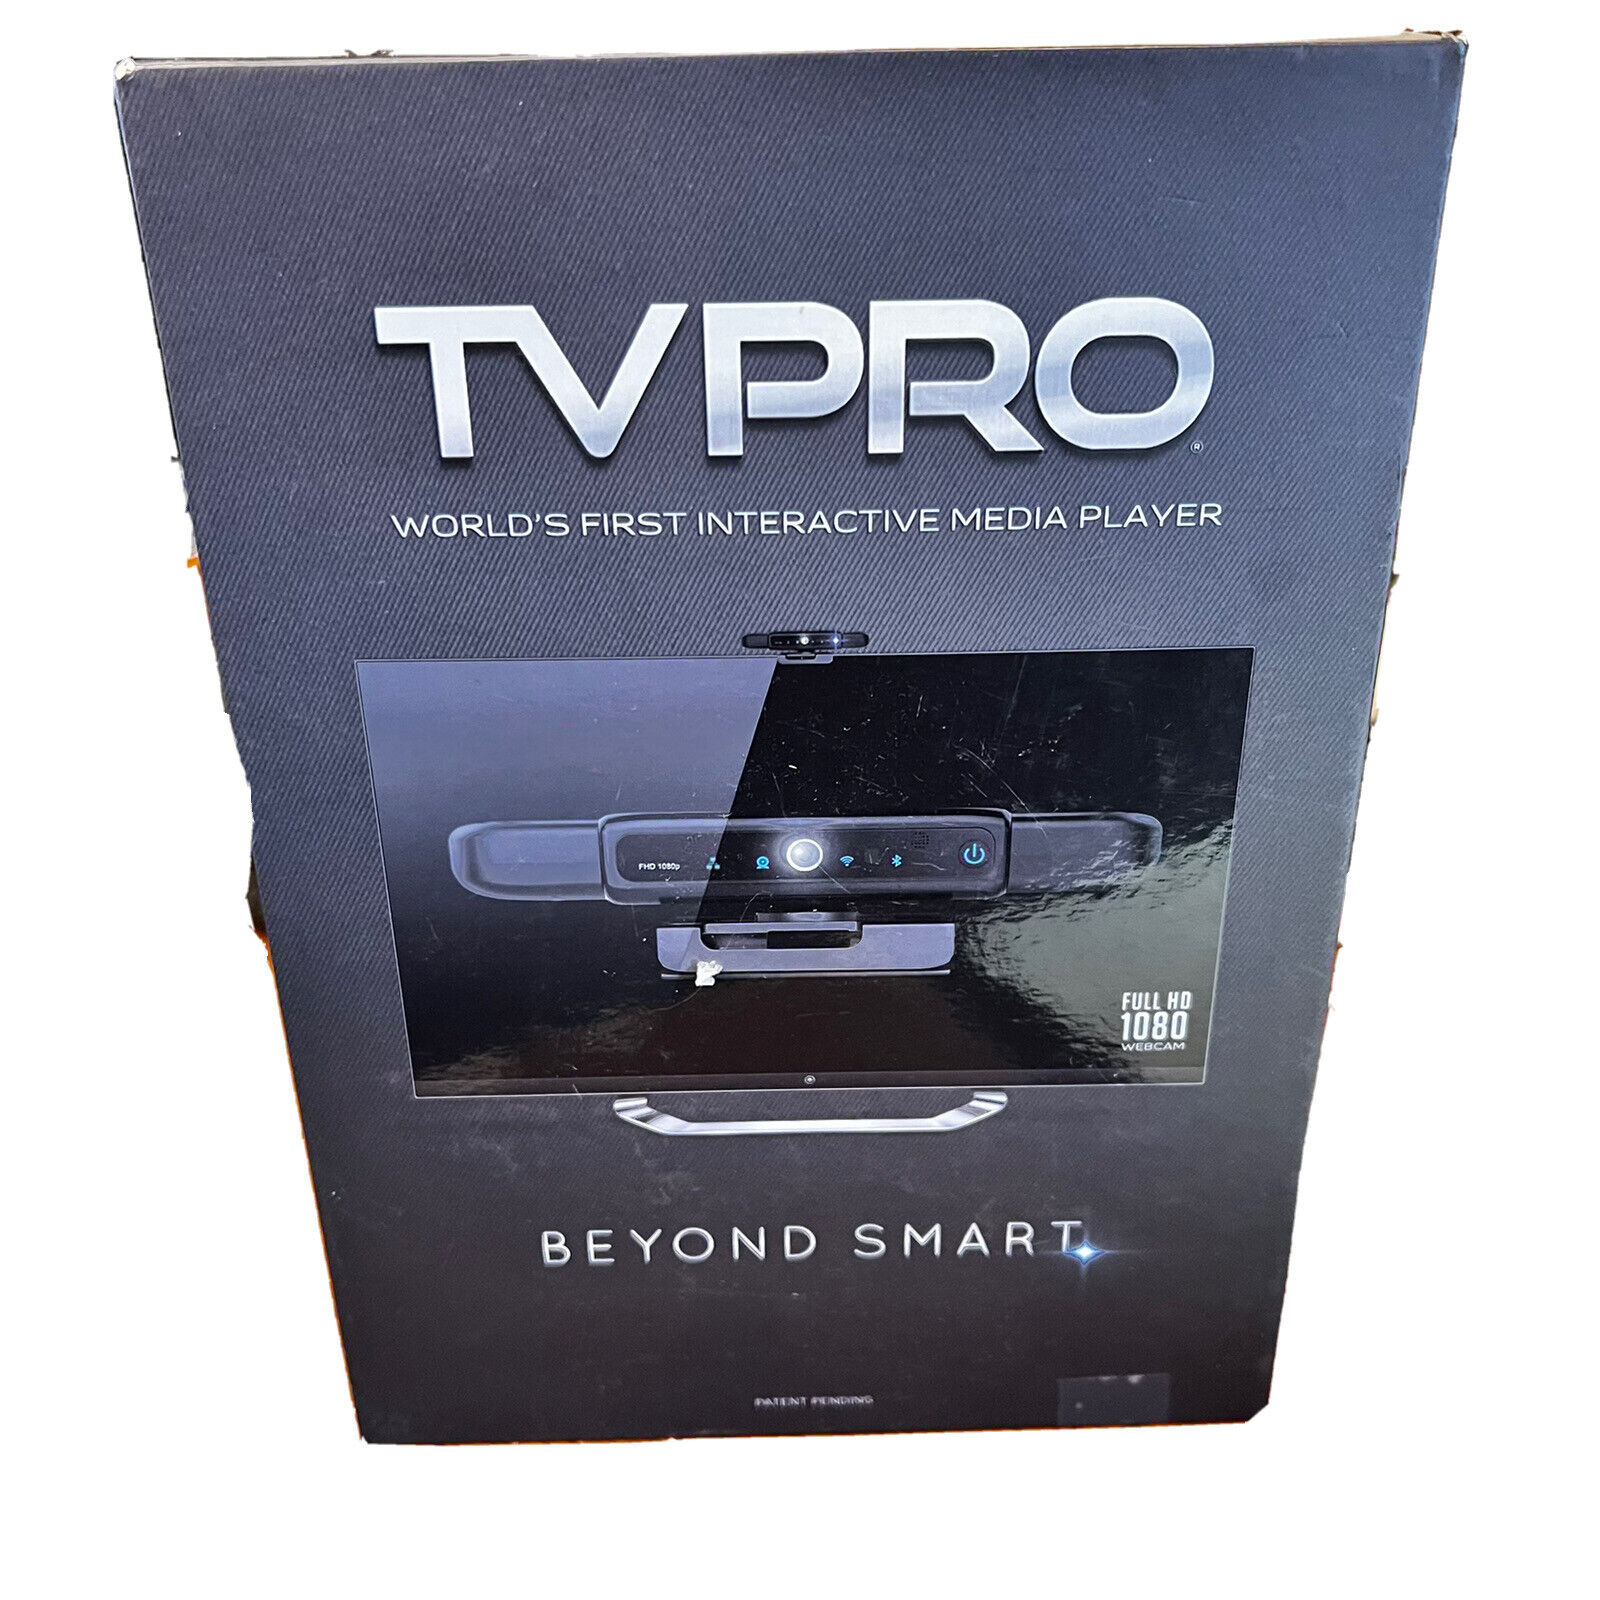 NEW TVPRO Interactive Media Player Full HD 1080p Webcam Camera Television 5MP